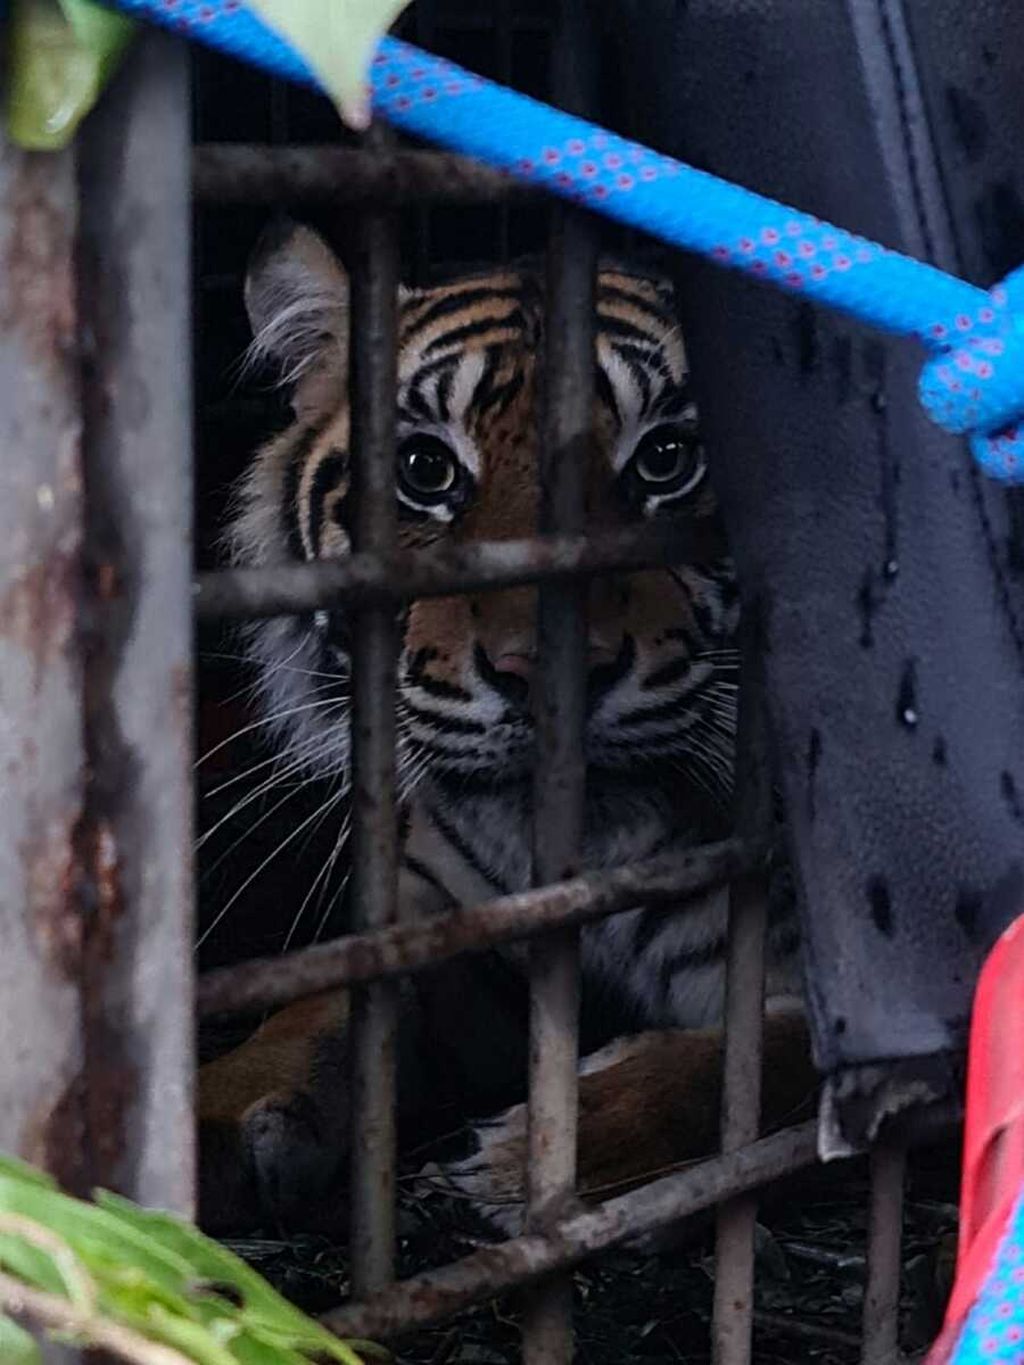 Dua harimau sumatera dimasukkan ke kandang saat hendak dilepasliarkan di zona inti Taman Nasional Kerinci Seblat (TNKS), Jambi, Rabu (8/6/2022). Dua harimau sumatera itu anak dari korban konflik. Keduanya lahir dan besar di Suaka Satwa Harimau Sumatera Barumun.